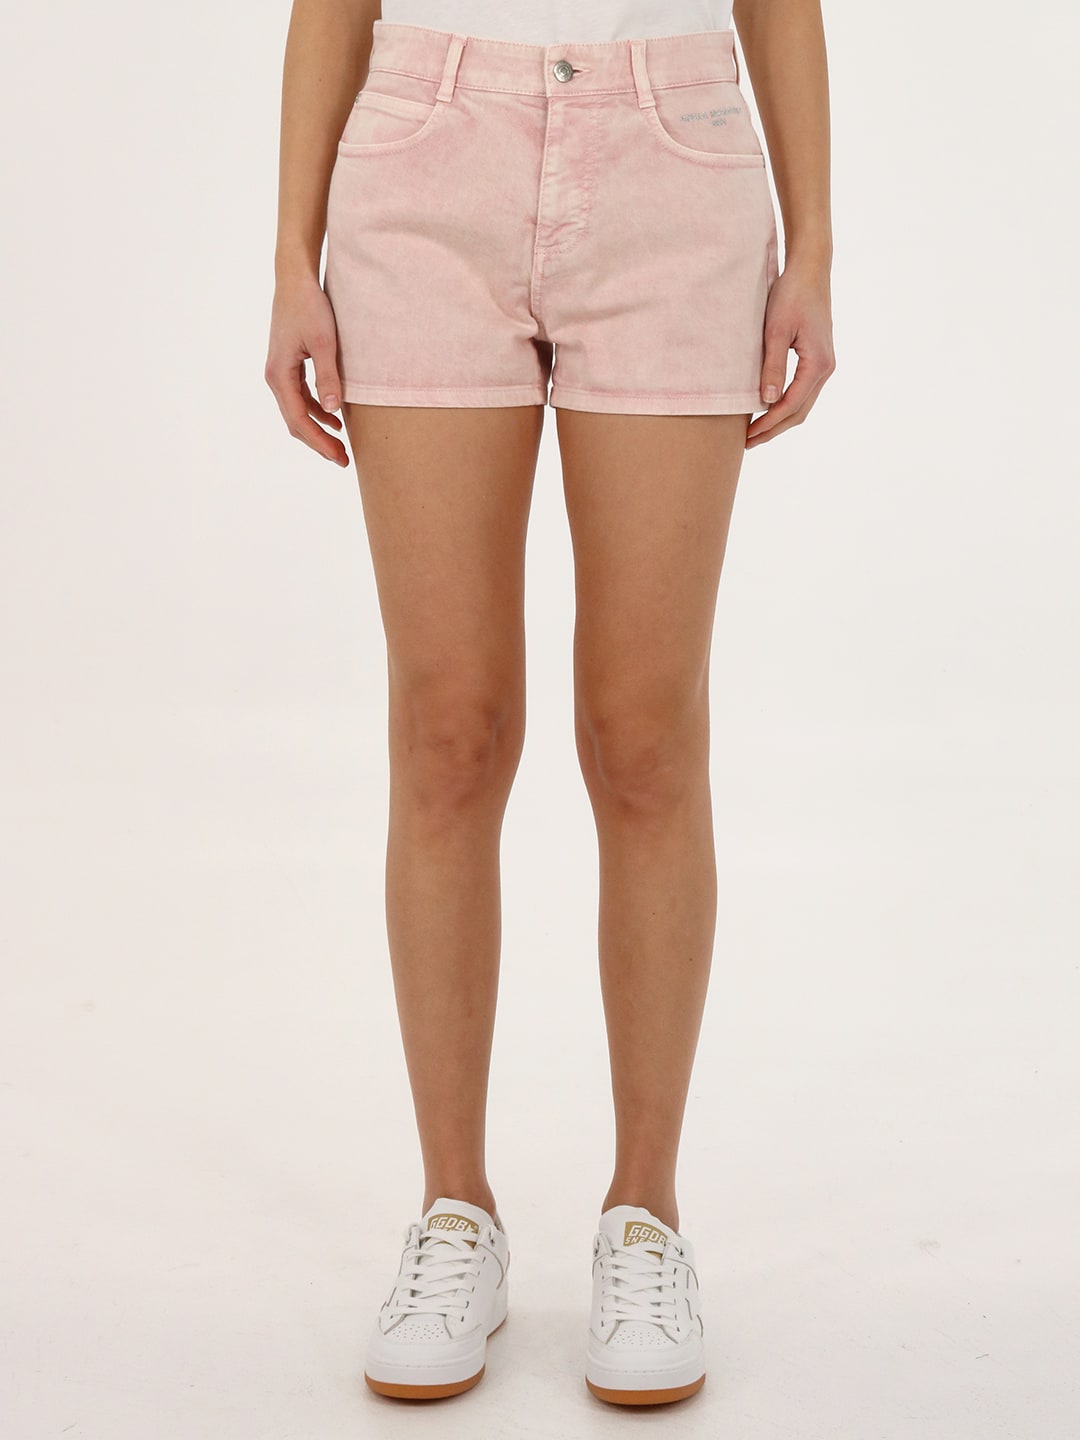 Stella McCartney Embroidered Pink Shorts